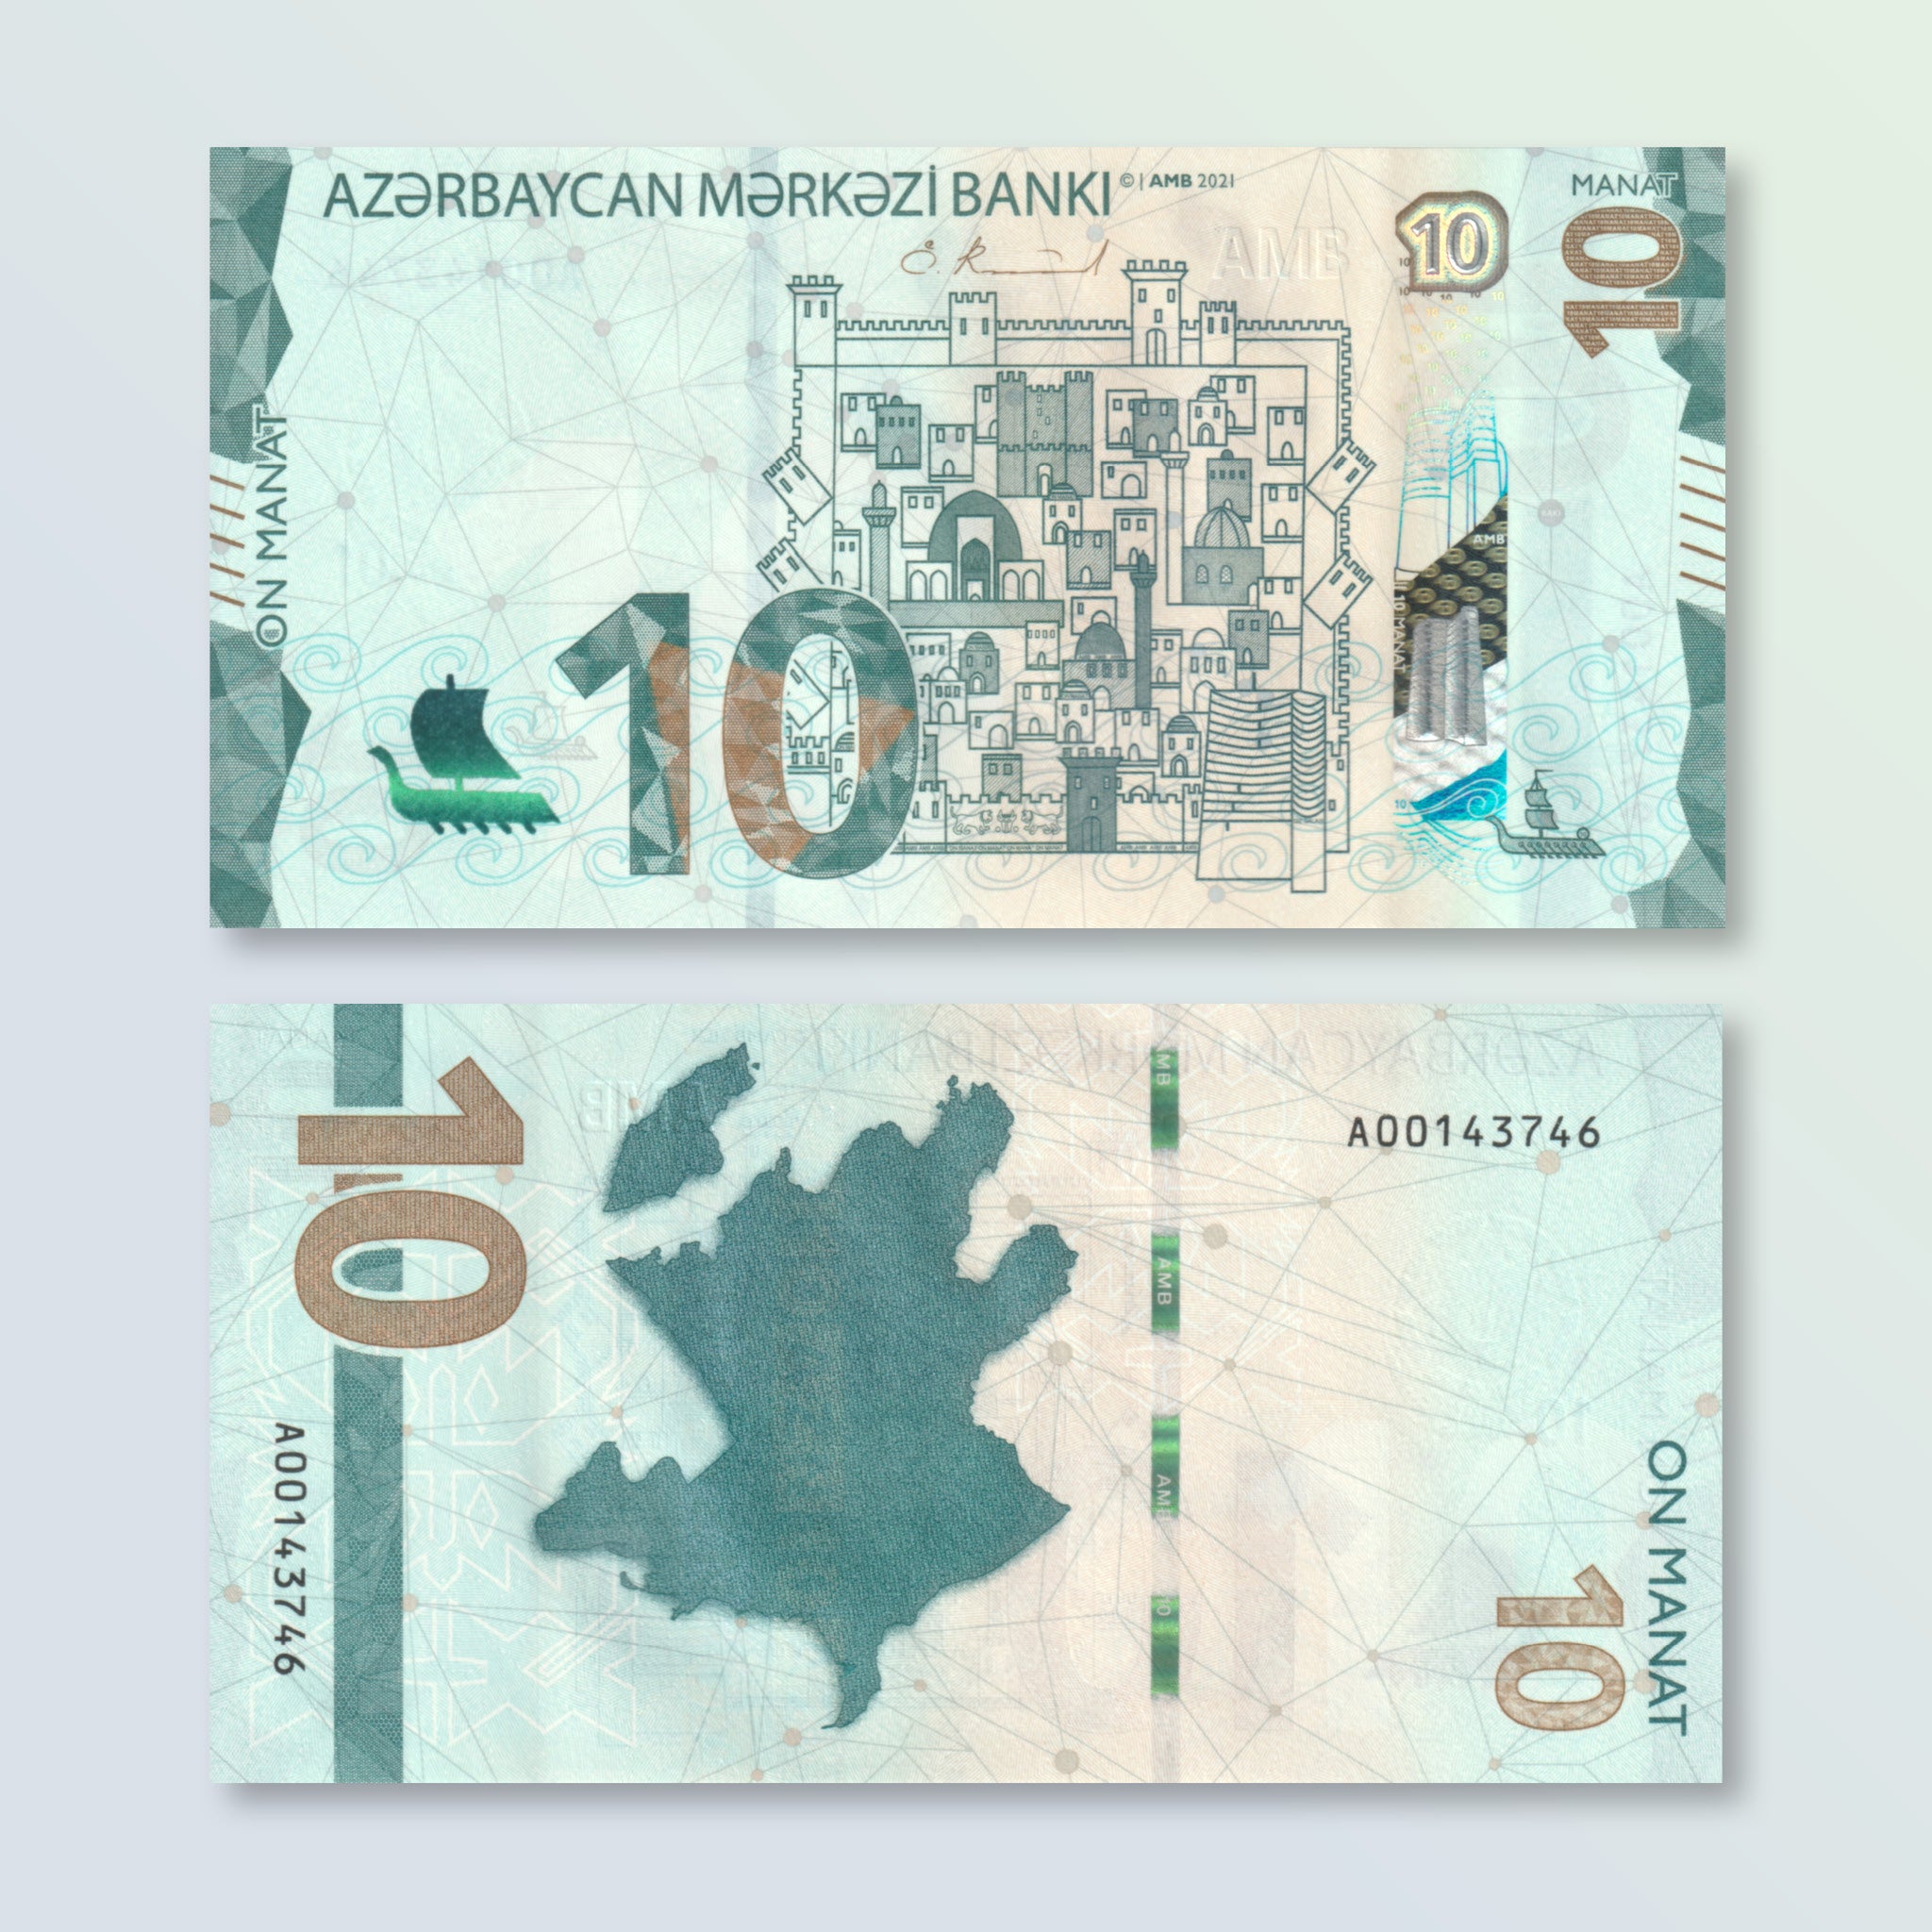 Azerbaijan 10 Manat, 2021, B410a, UNC - Robert's World Money - World Banknotes